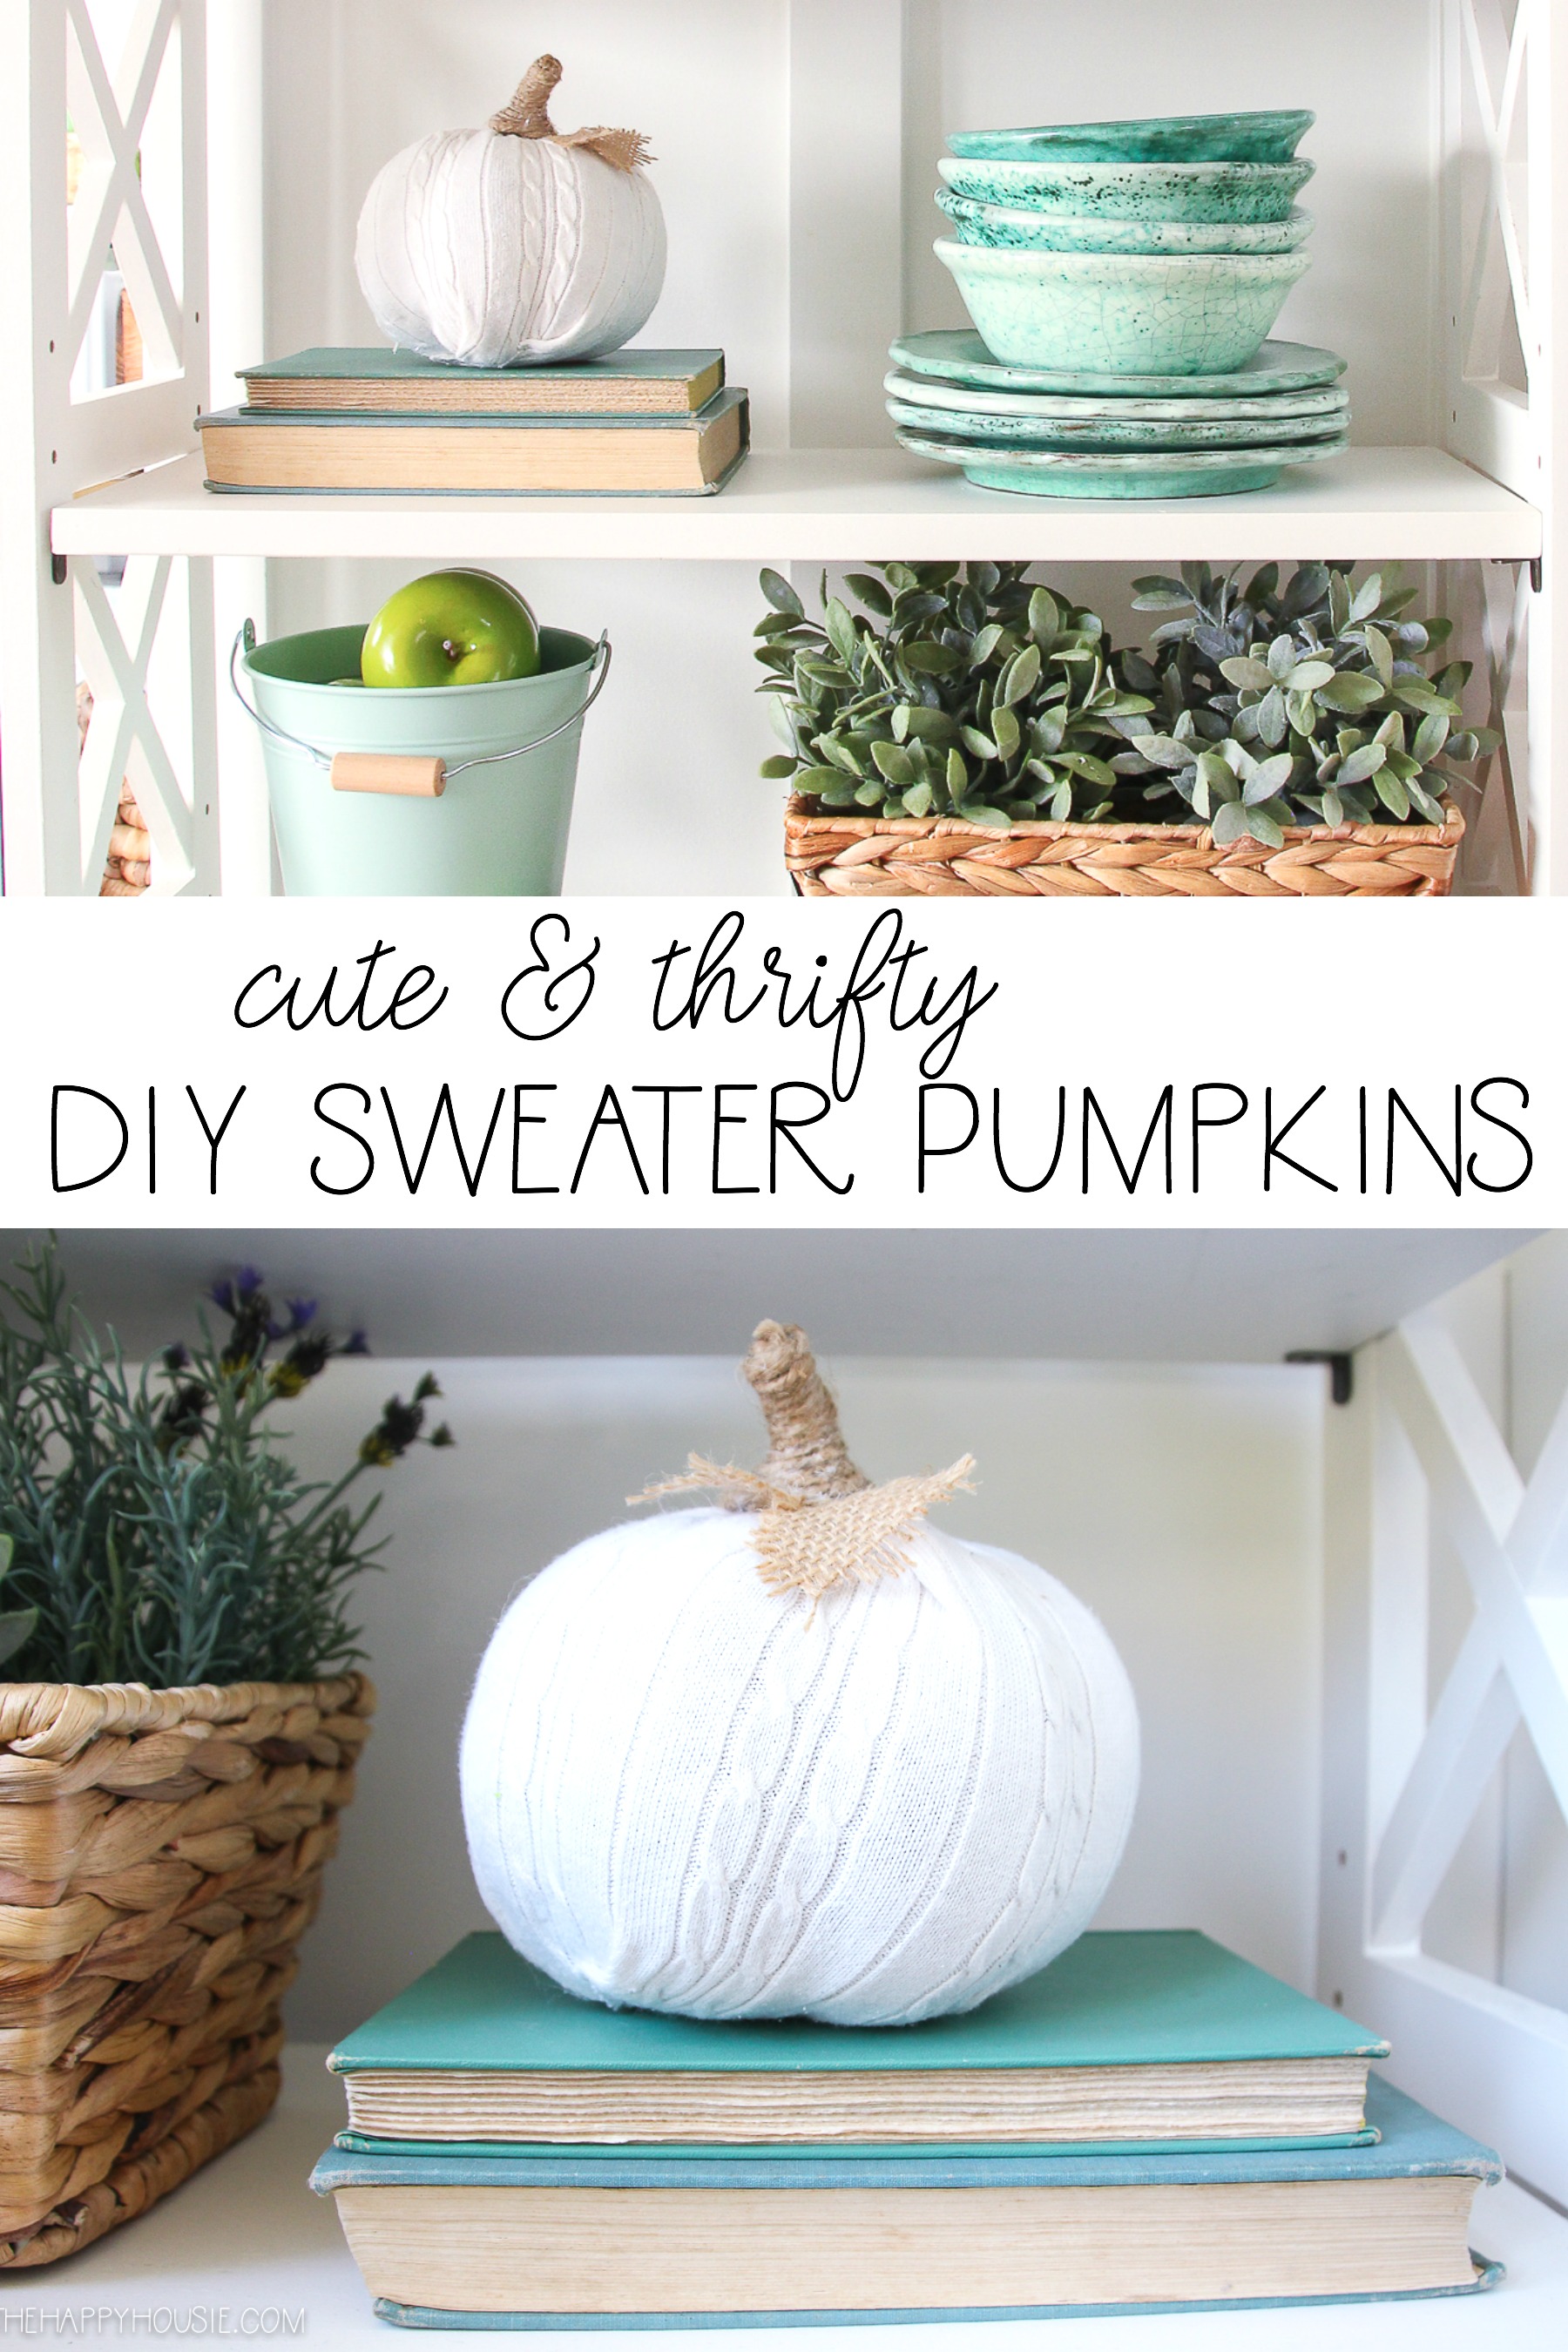 Cute & Thrifty DIY Sweater Pumpkins graphic.